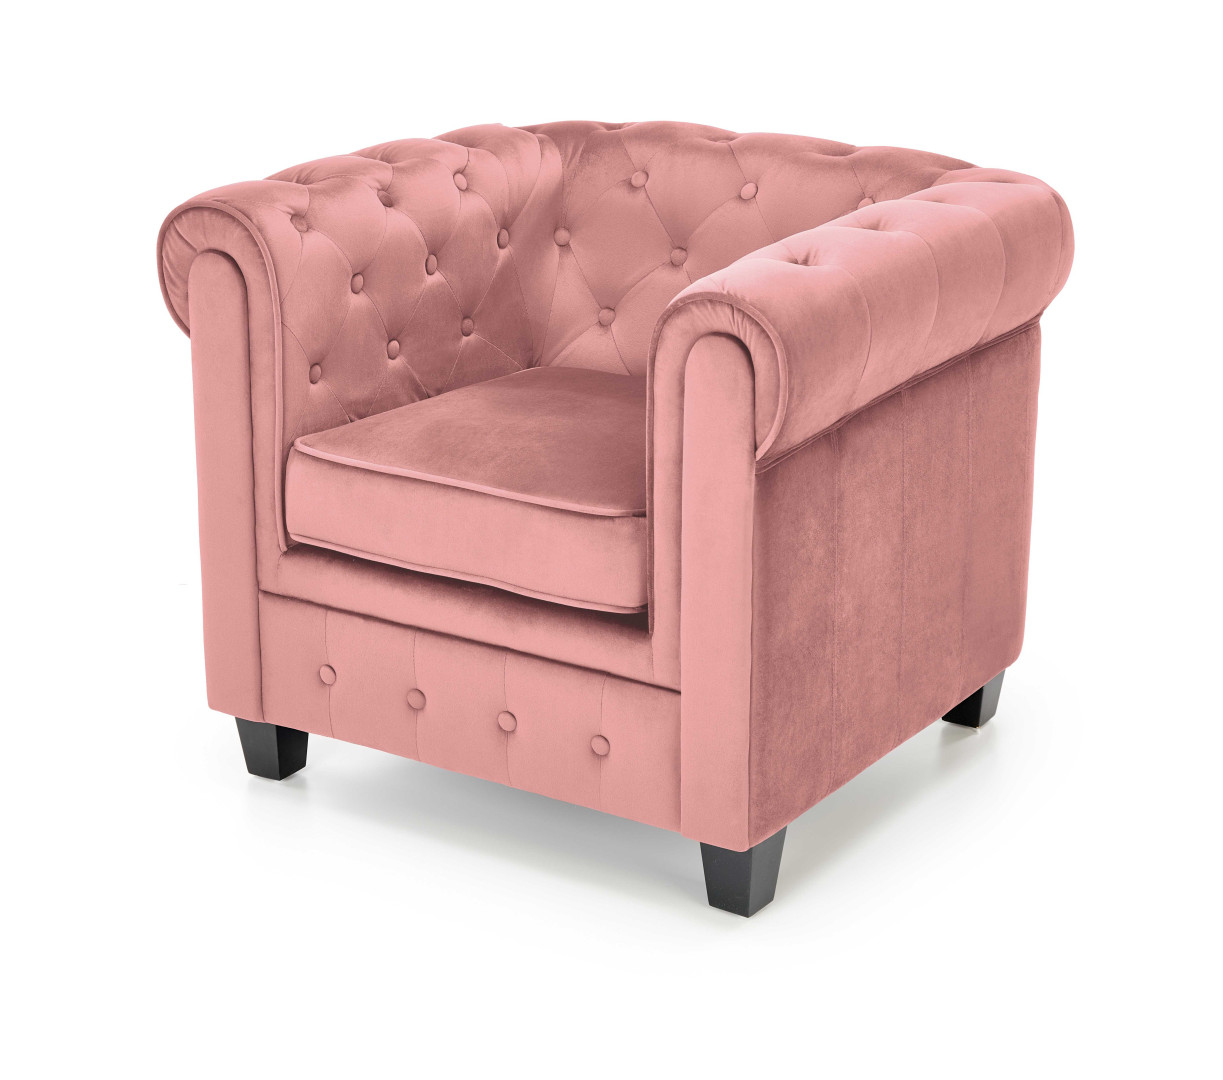 Produkt w kategorii: Fotele, nazwa produktu: Fotel ERIKSEN - luksusowy mebel glamour